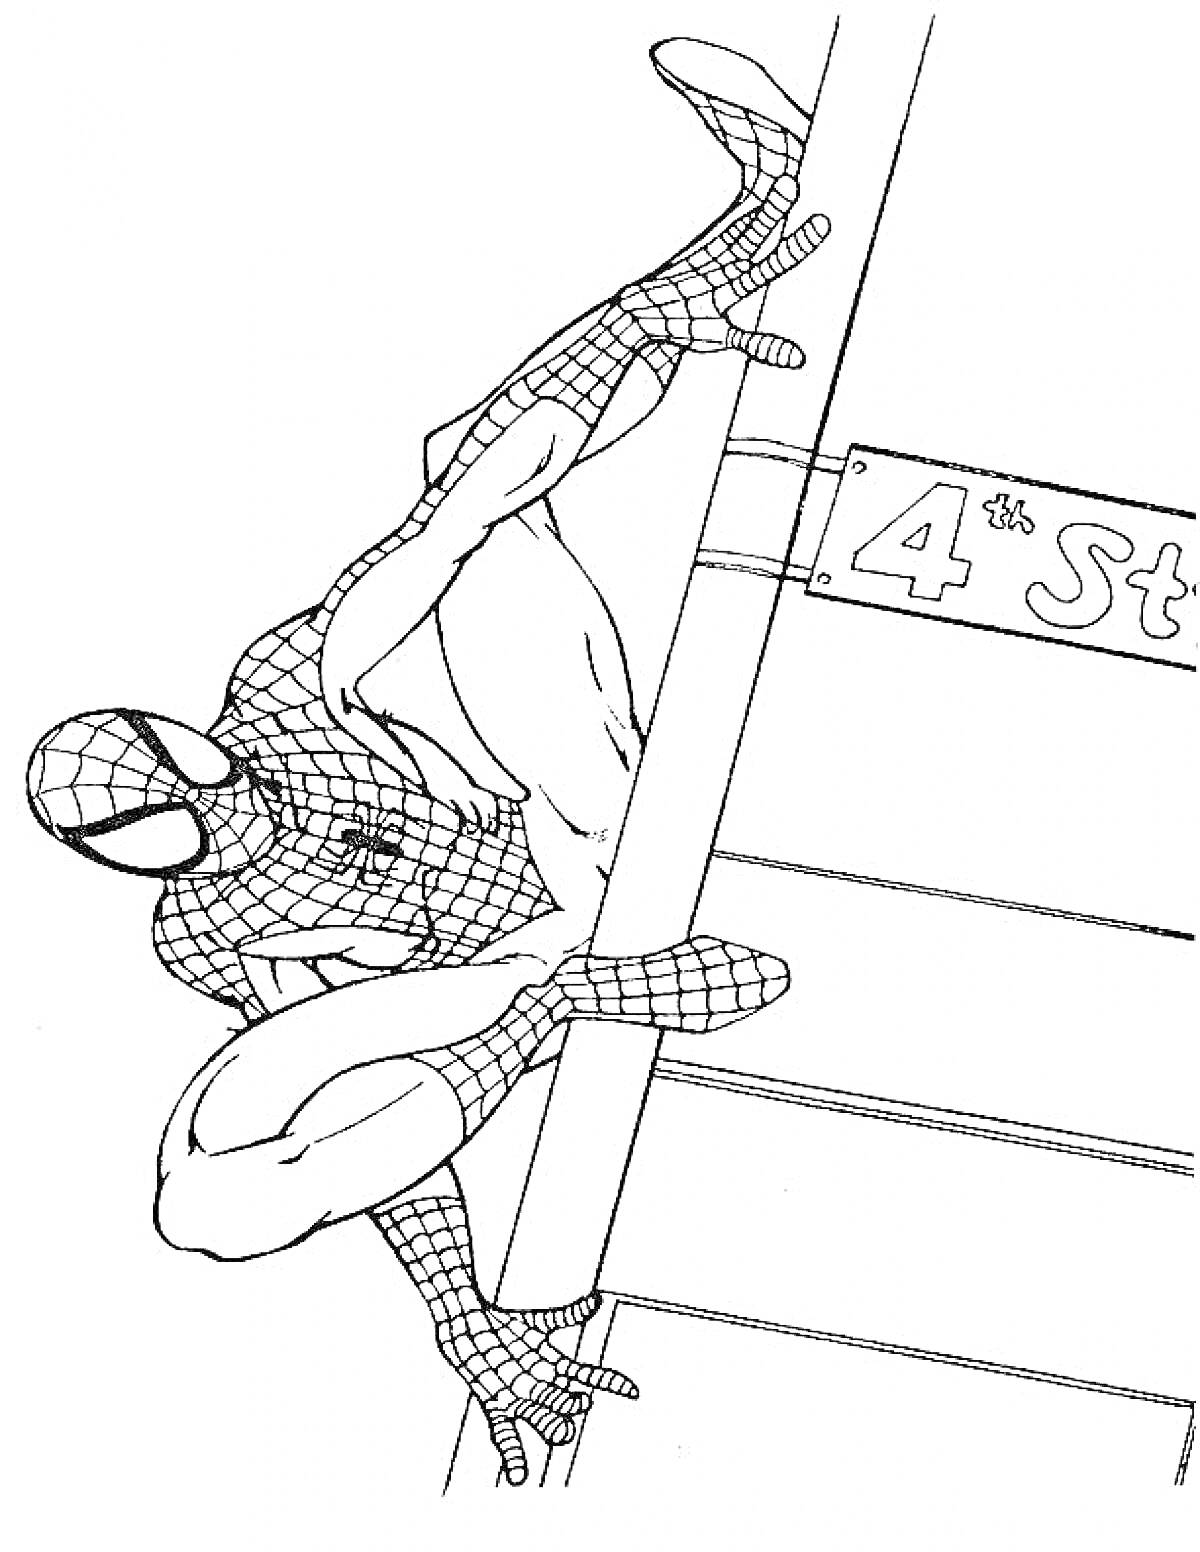 Человек-паук на стене с табличкой улицы 4th St.